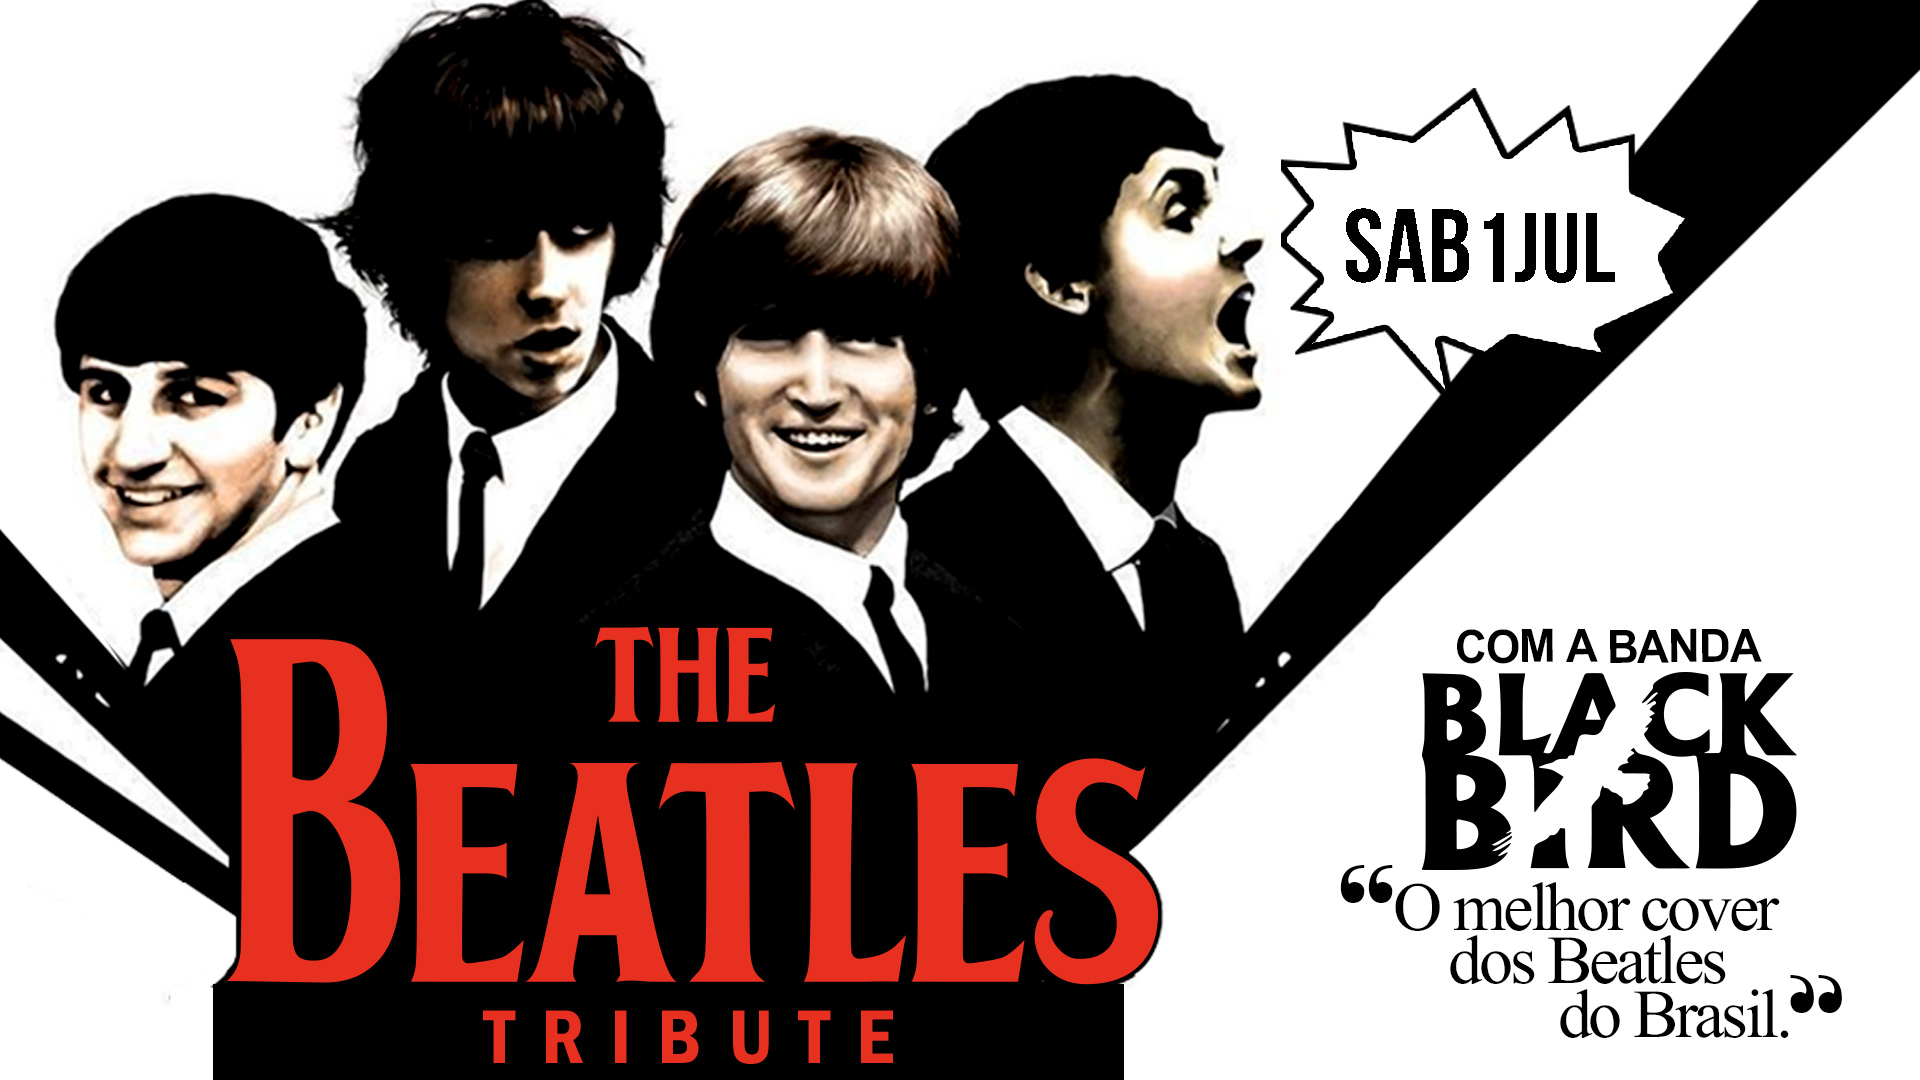 sábado - The Beatles Tribute: Black Bird